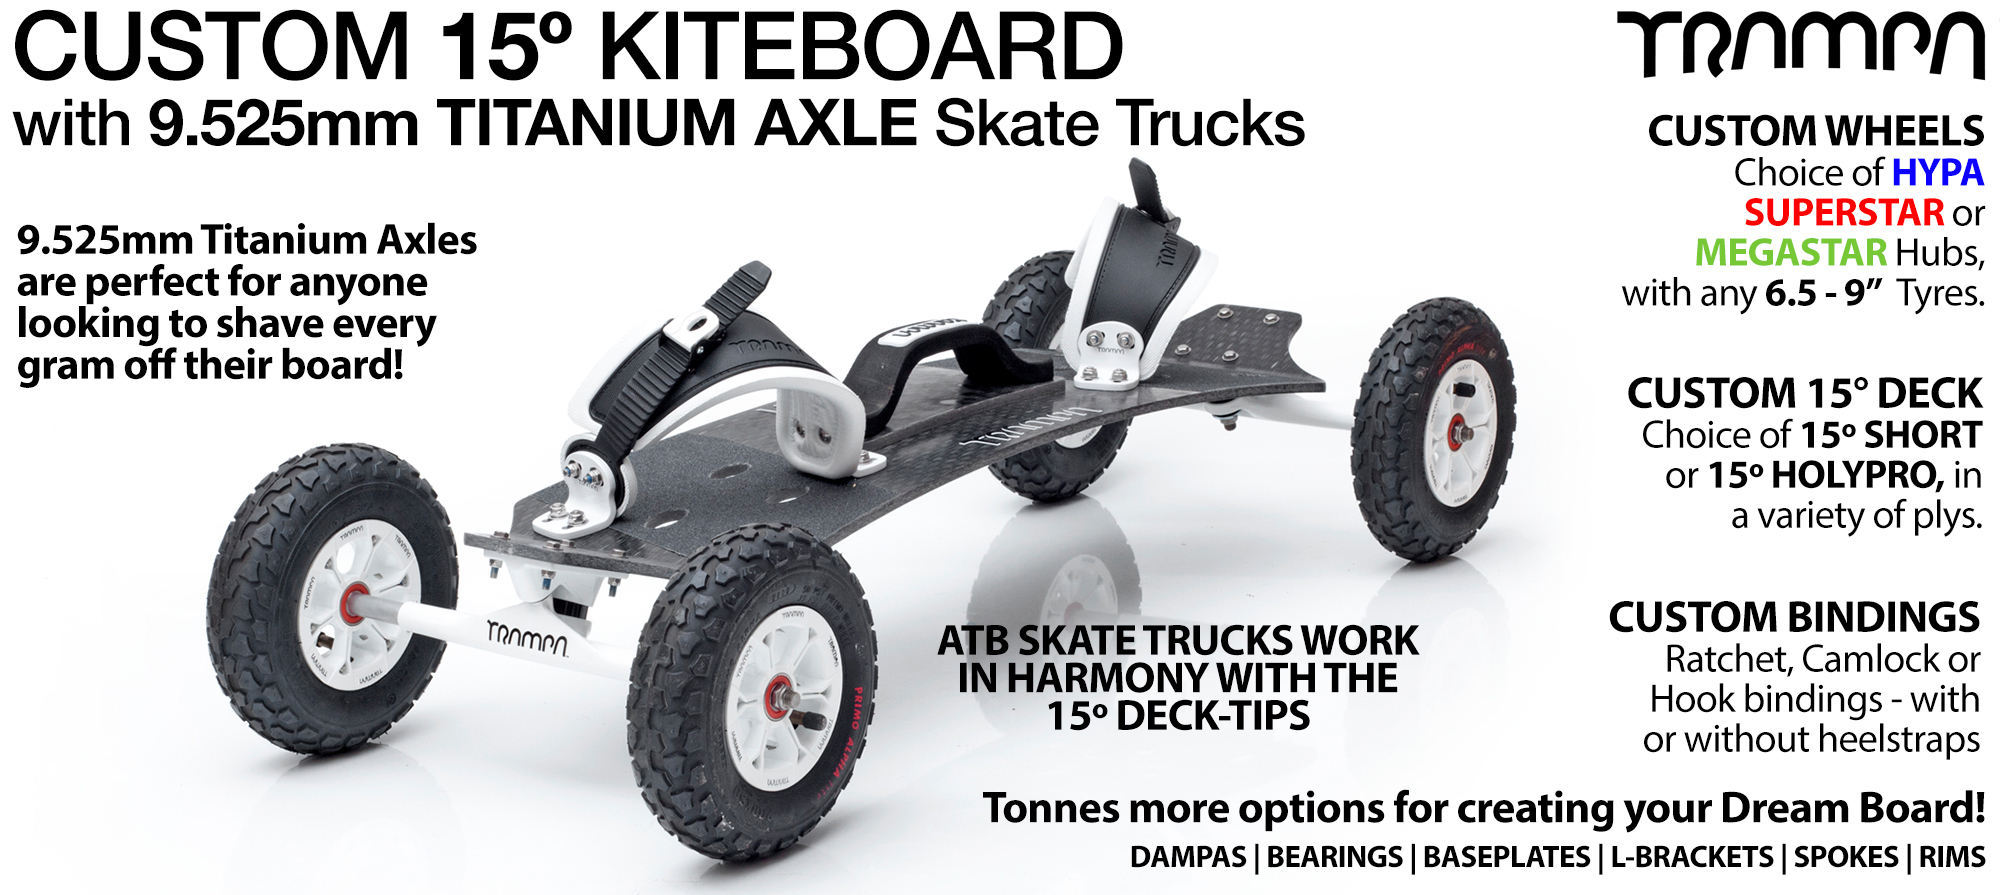 15° HOLYPRO TRAMPA Kiteboard - 9.525mm TITANIUM Axle Skate Trucks SUPERSTAR Wheels & CAMLOCK Bindings